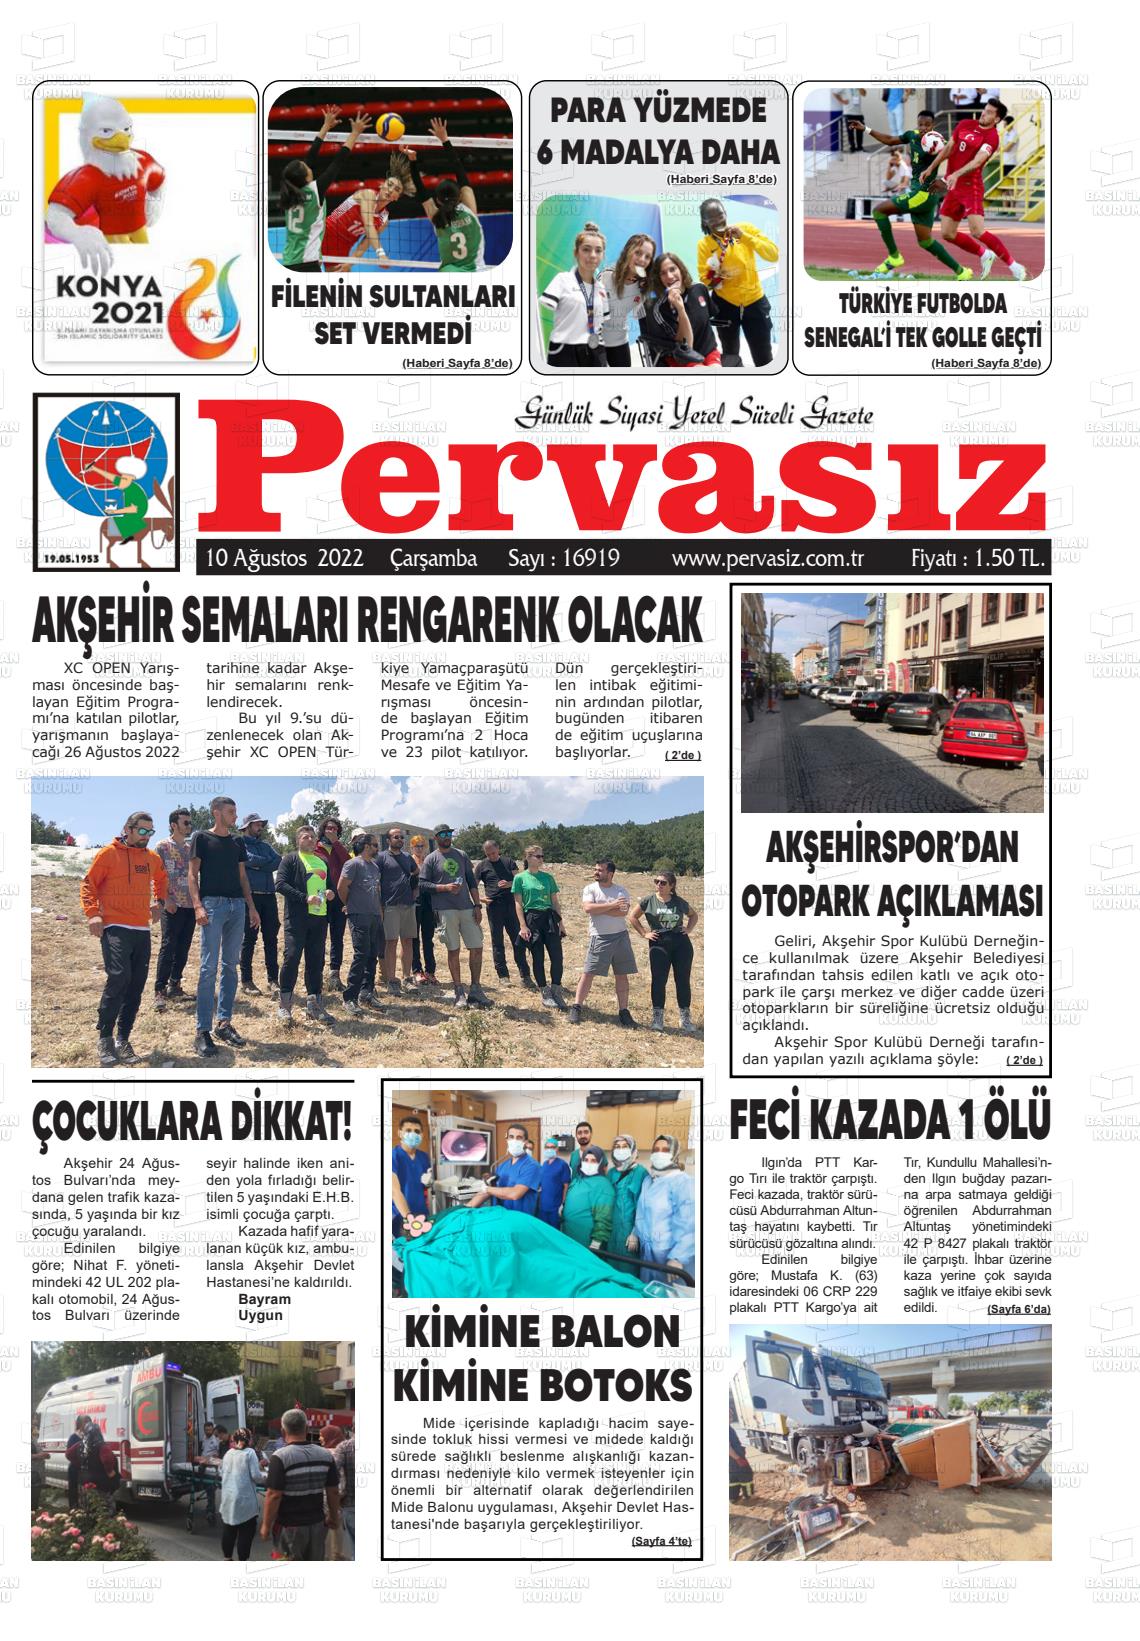 10 Ağustos 2022 Konya Pervasız Gazete Manşeti